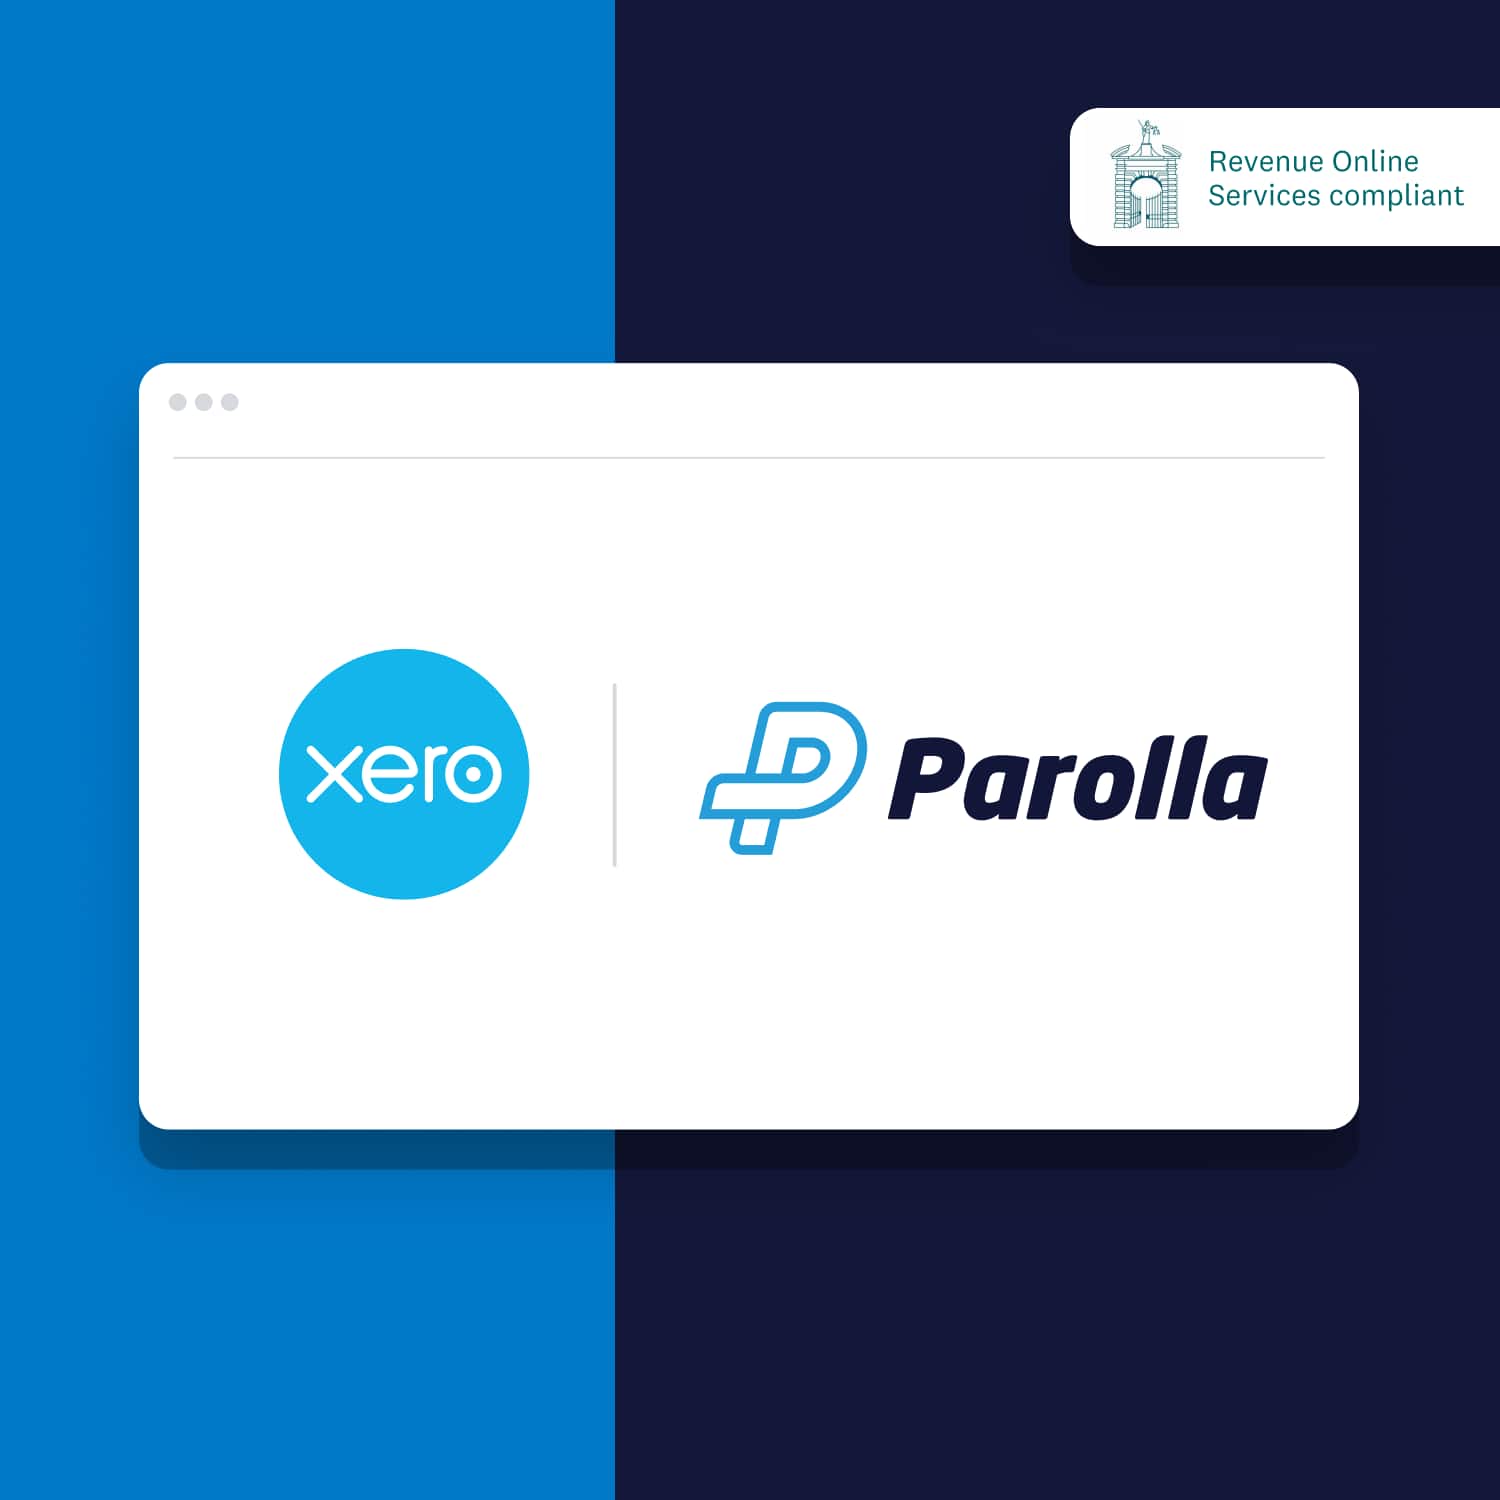 Xero logo and Parolla logo with Revenue logo